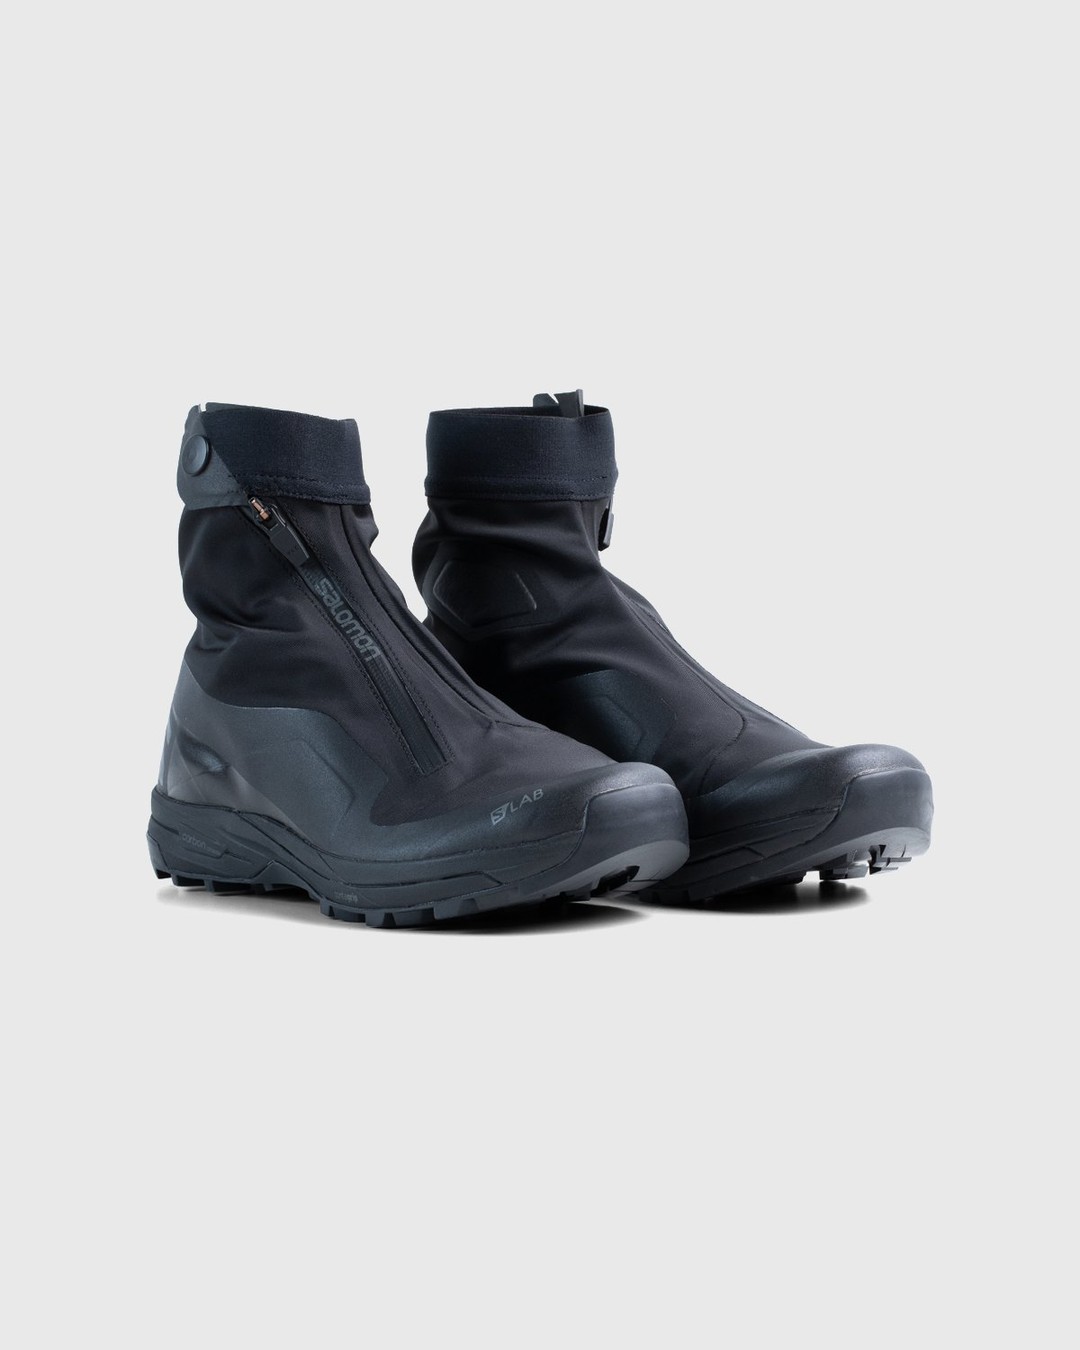 Salomon – S/Lab XA-Alpine 2 Limited Edition Black - Sneakers - Black - Image 2